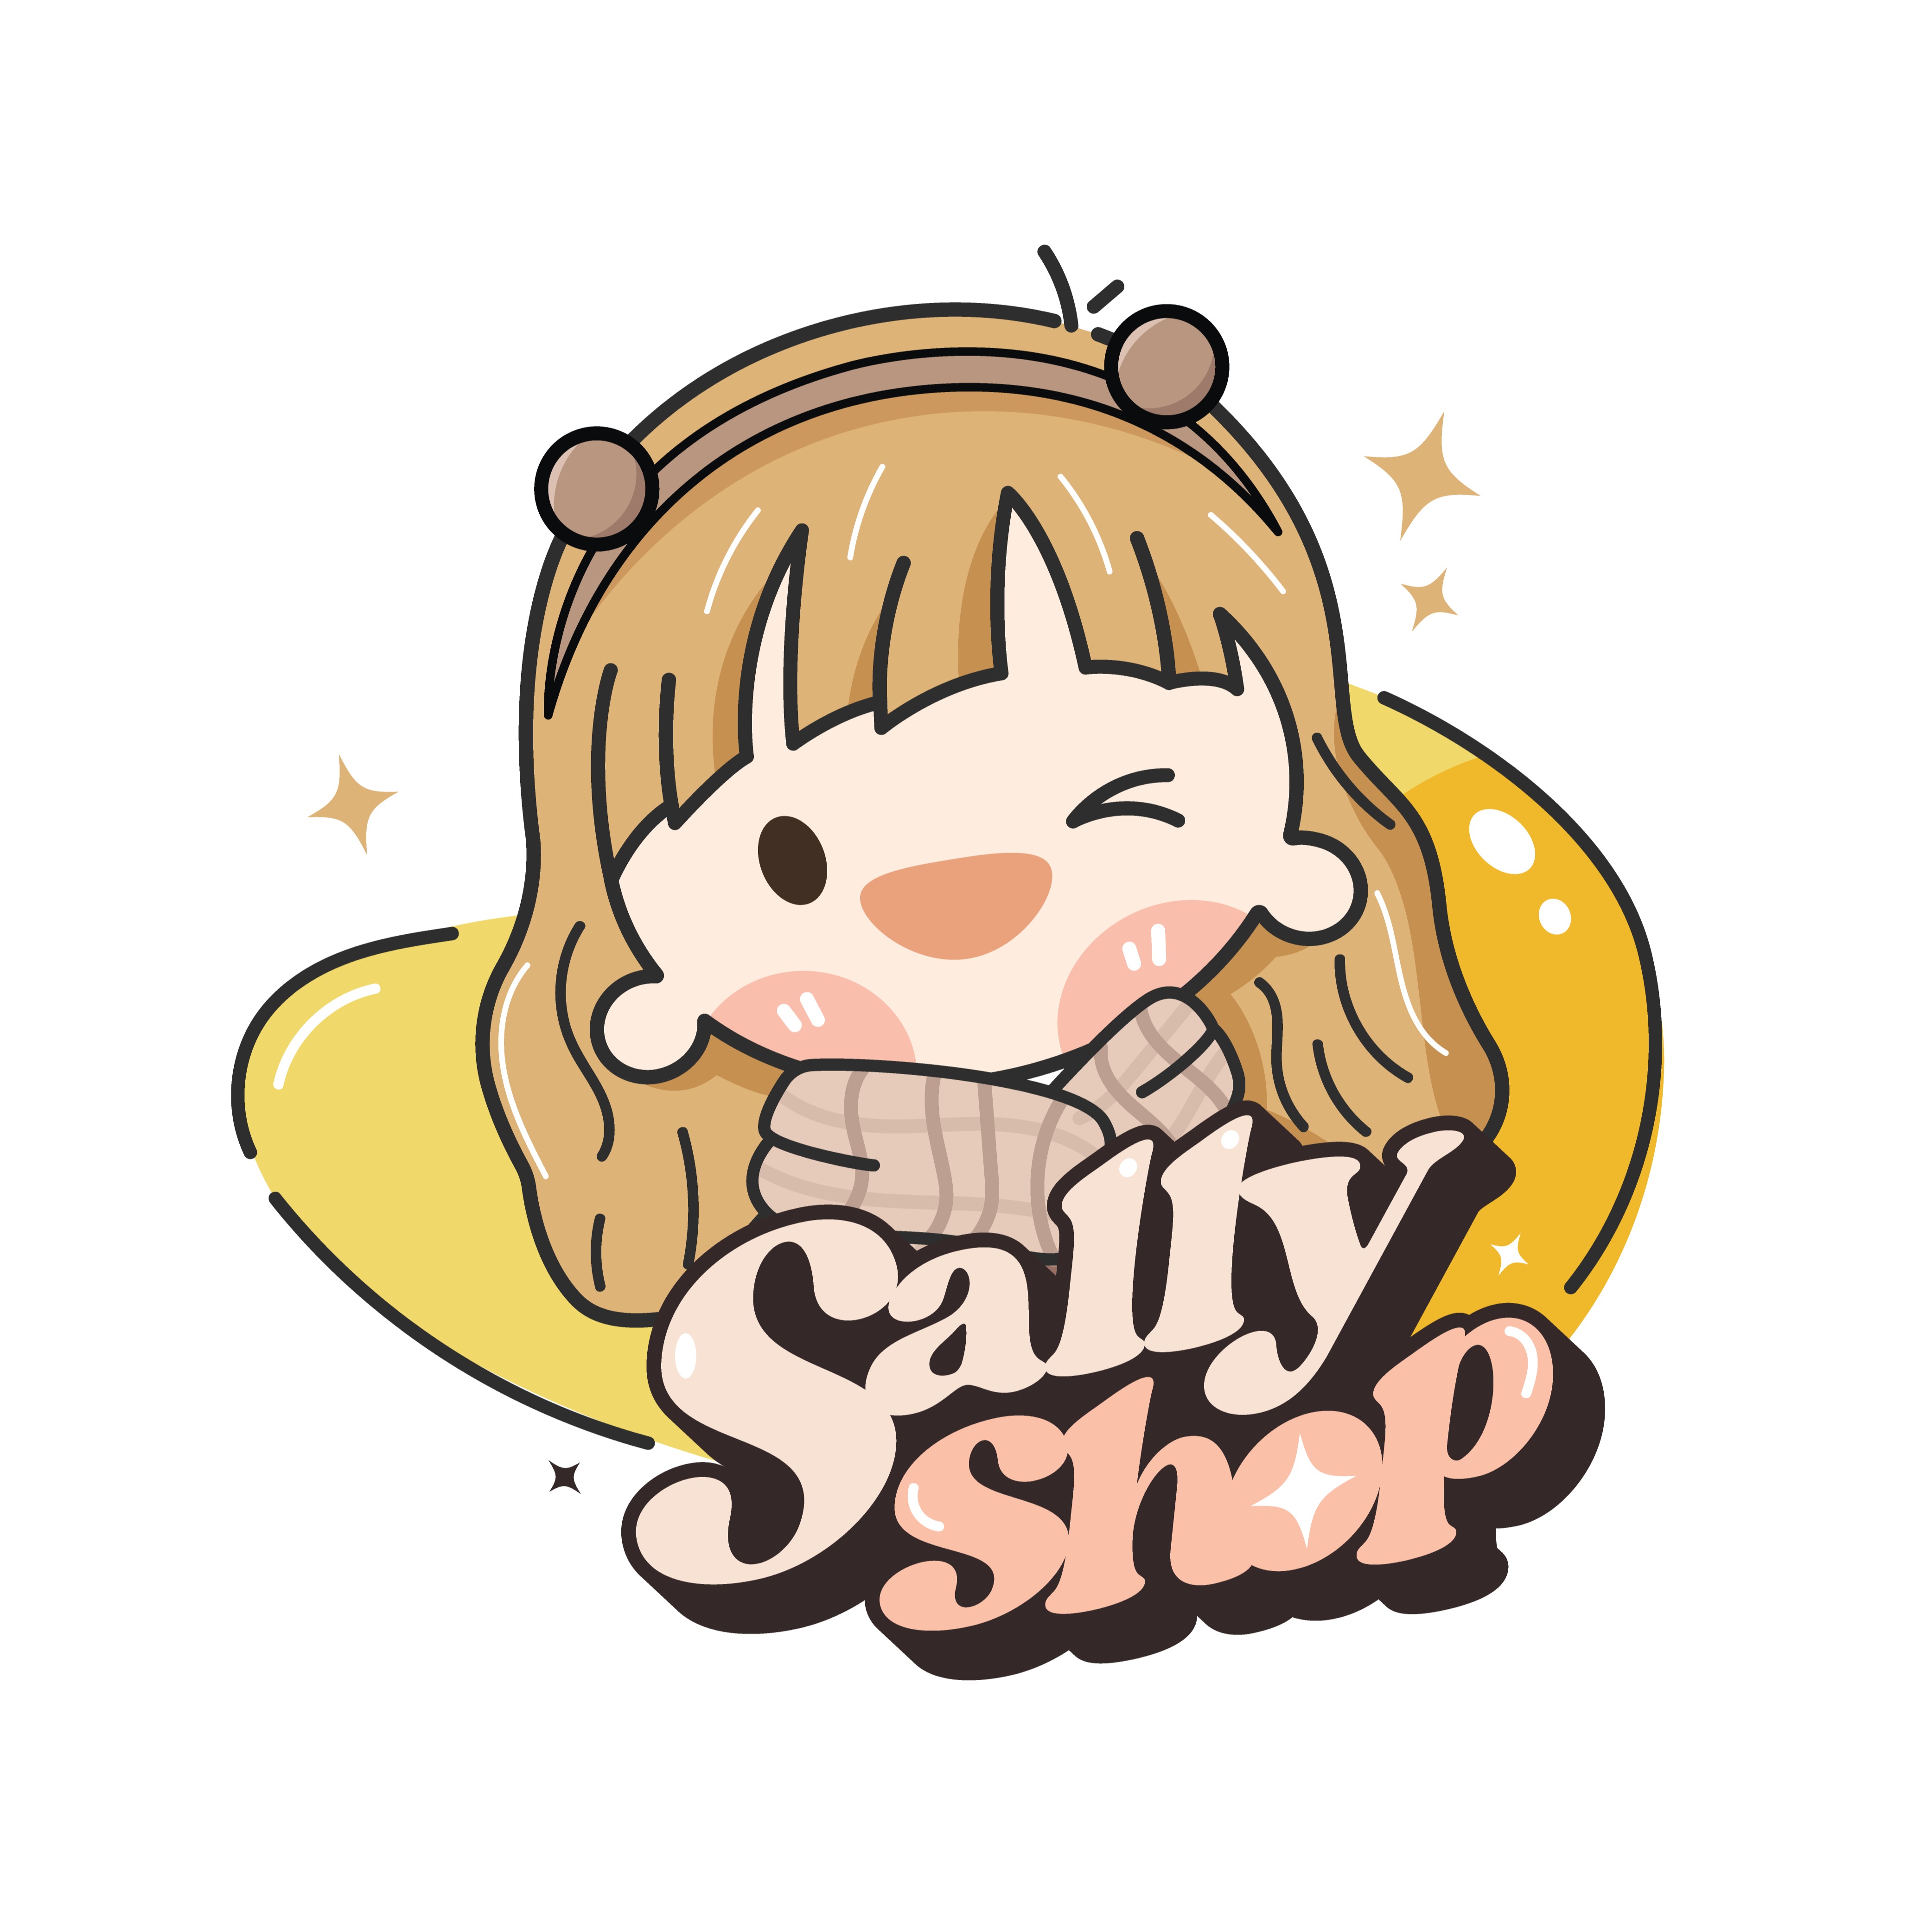 The Sally Shop